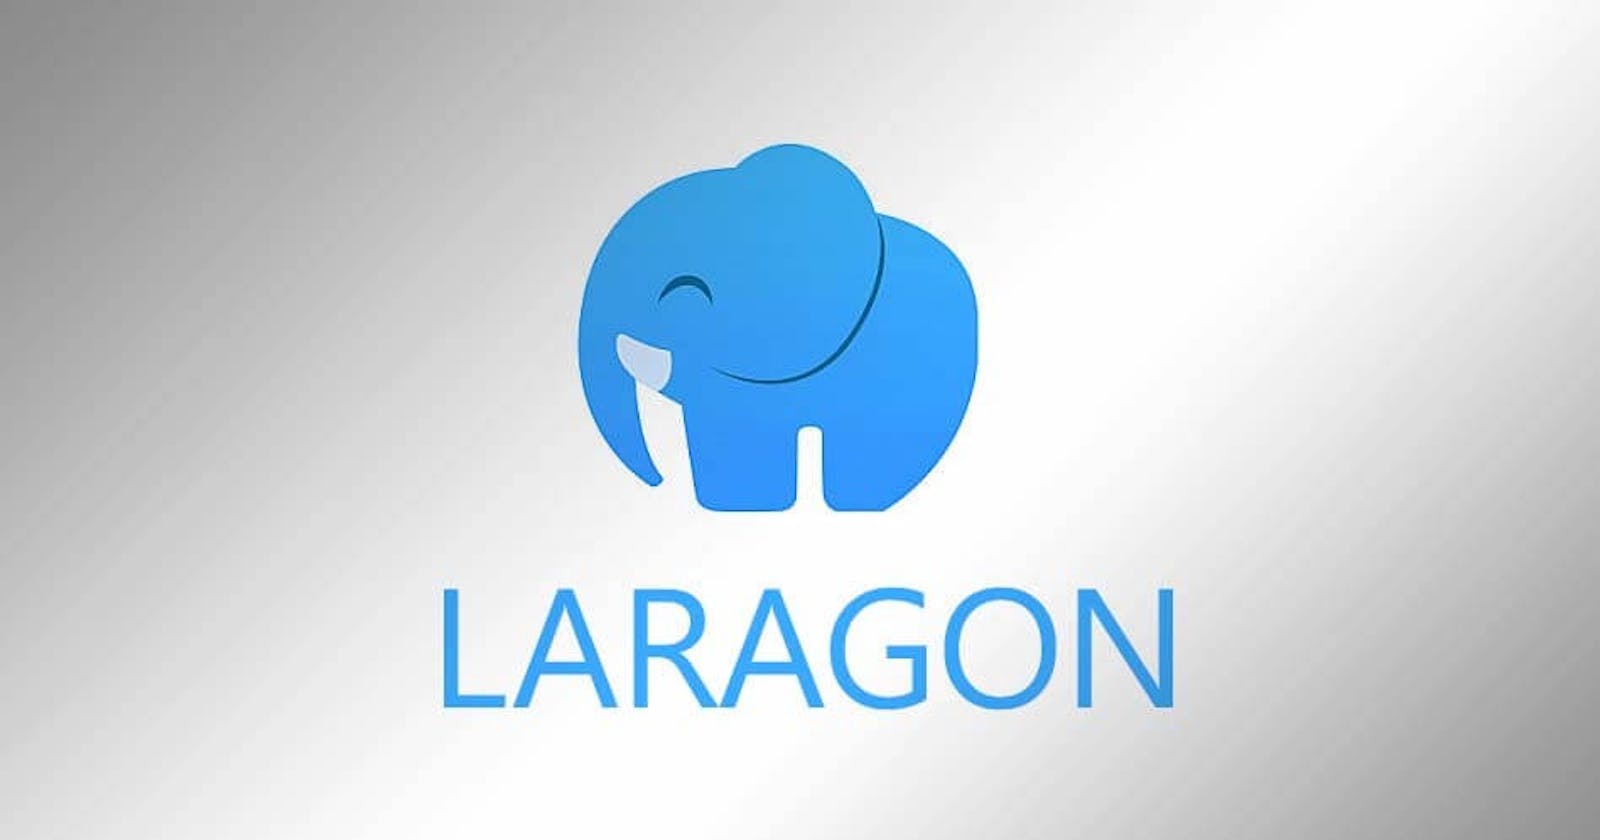 How to use laragon